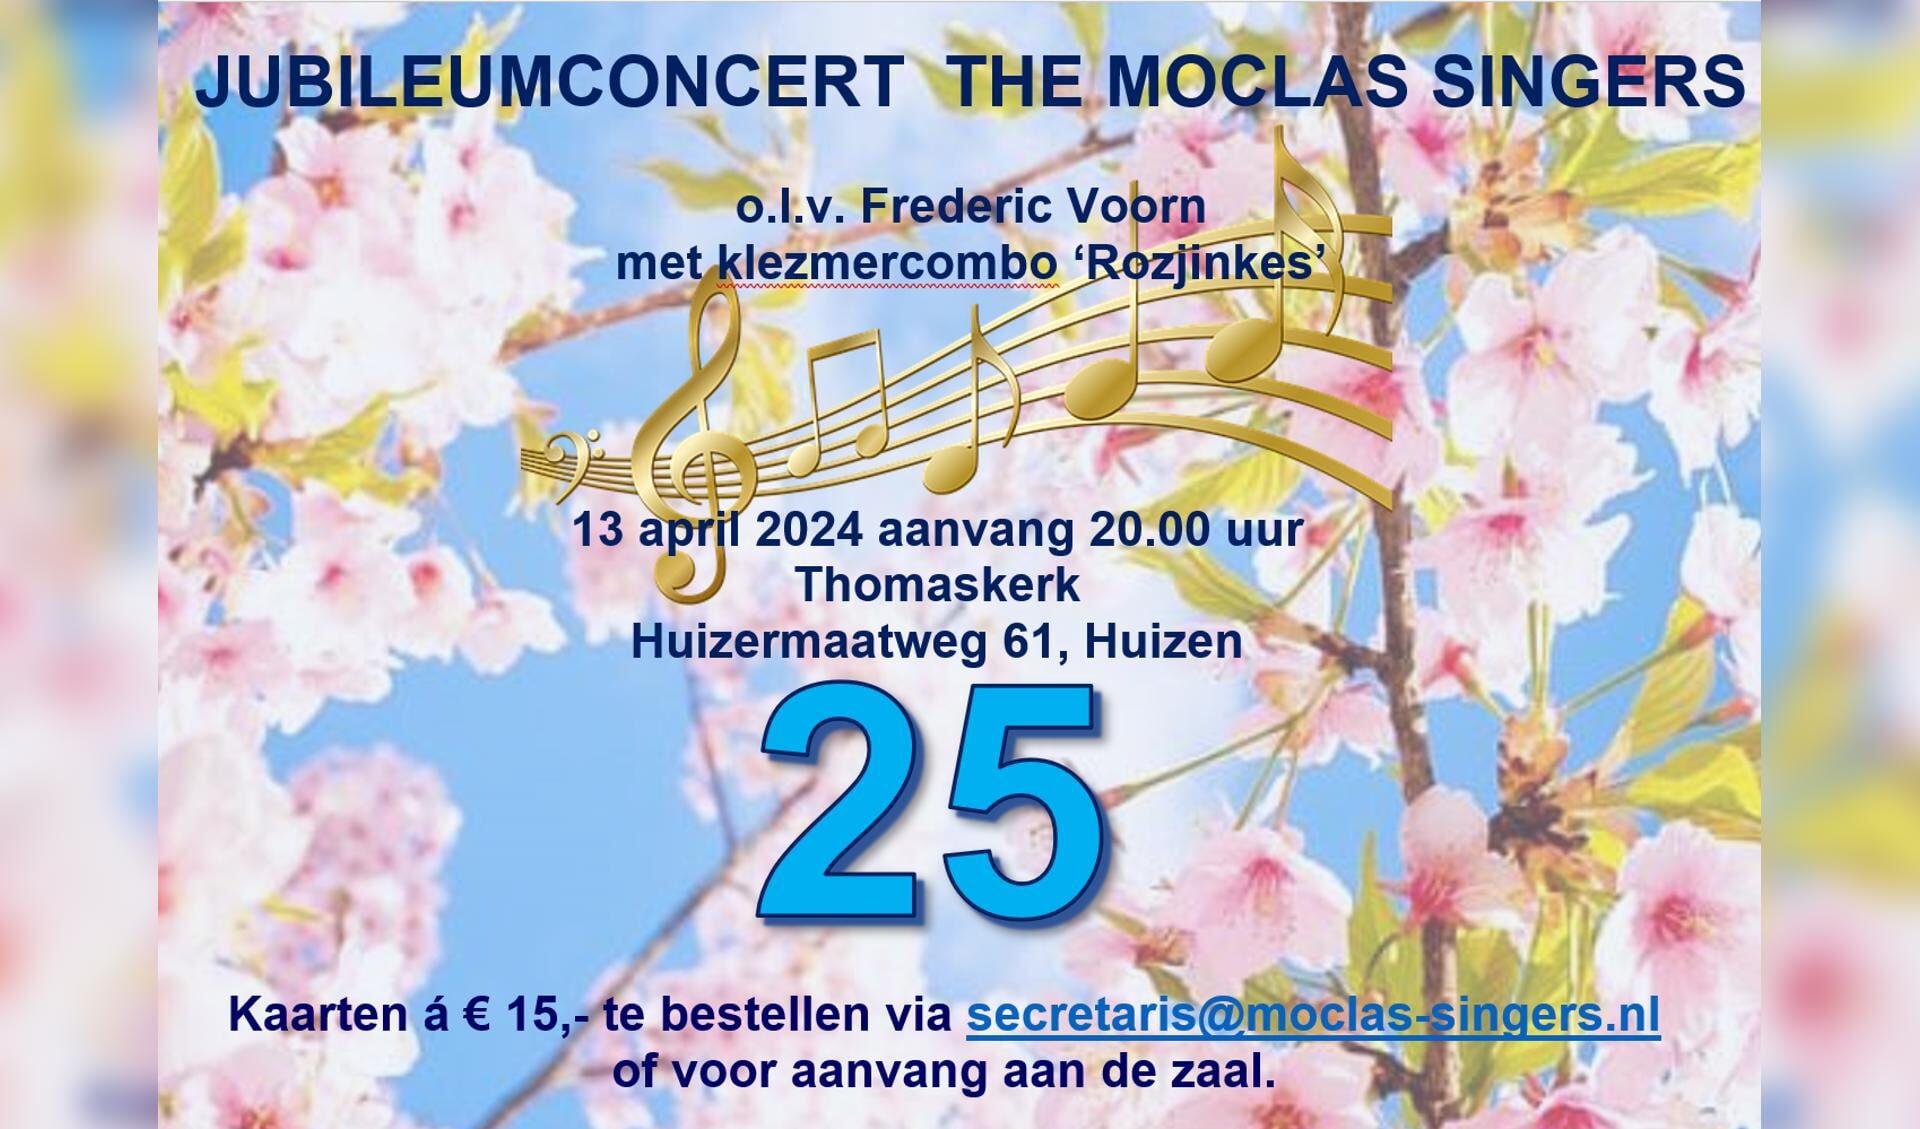 Jubileumconcert The Moclas Singers